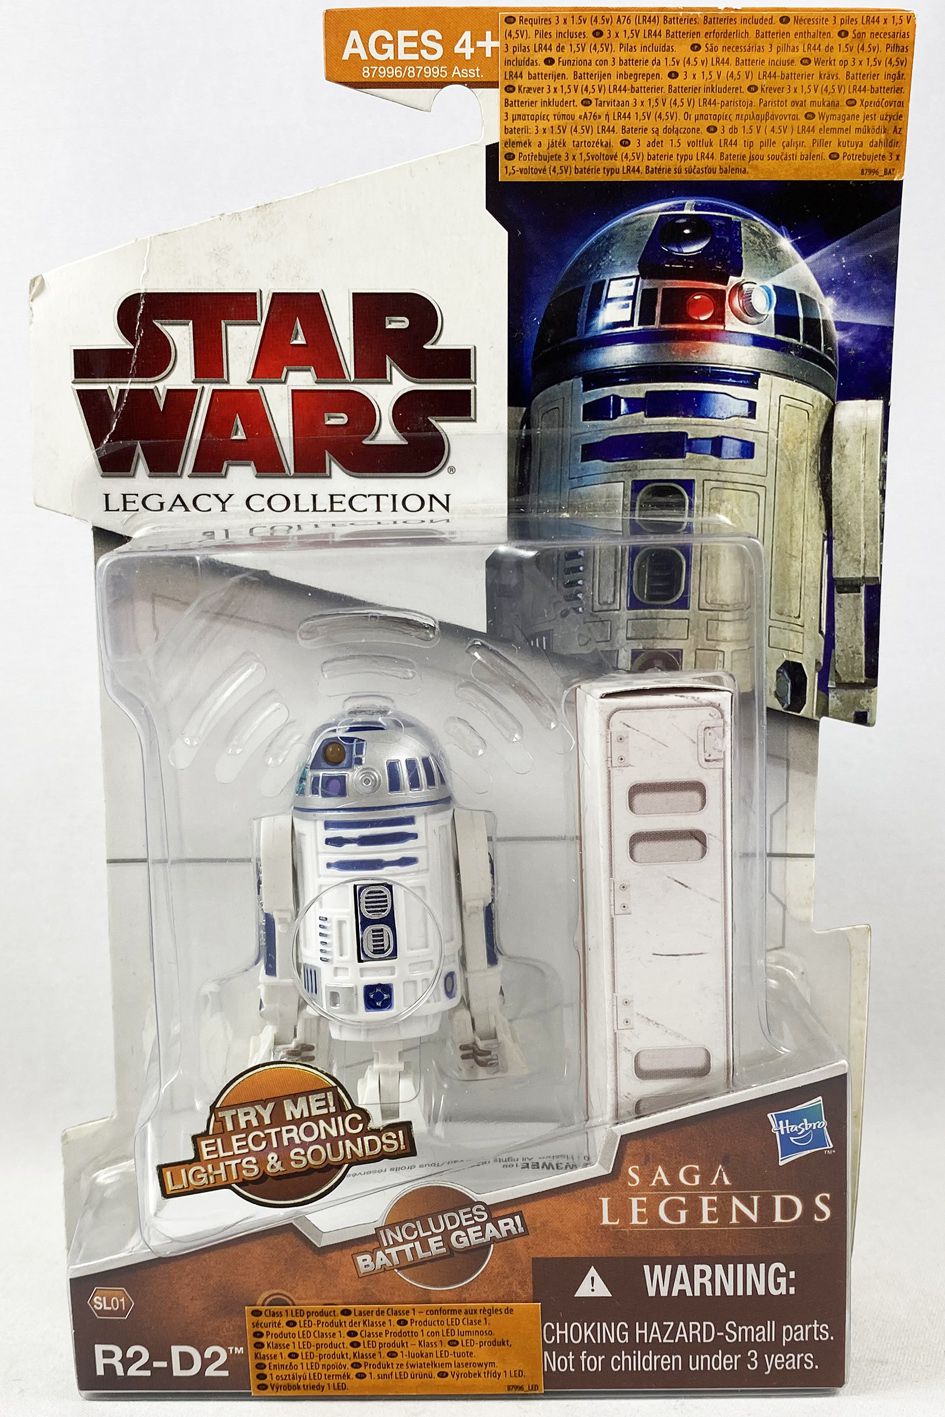 Star Wars Saga R2-D2 action figure 2002 Argent Anniversaire Jouet Hasbro exclusives 